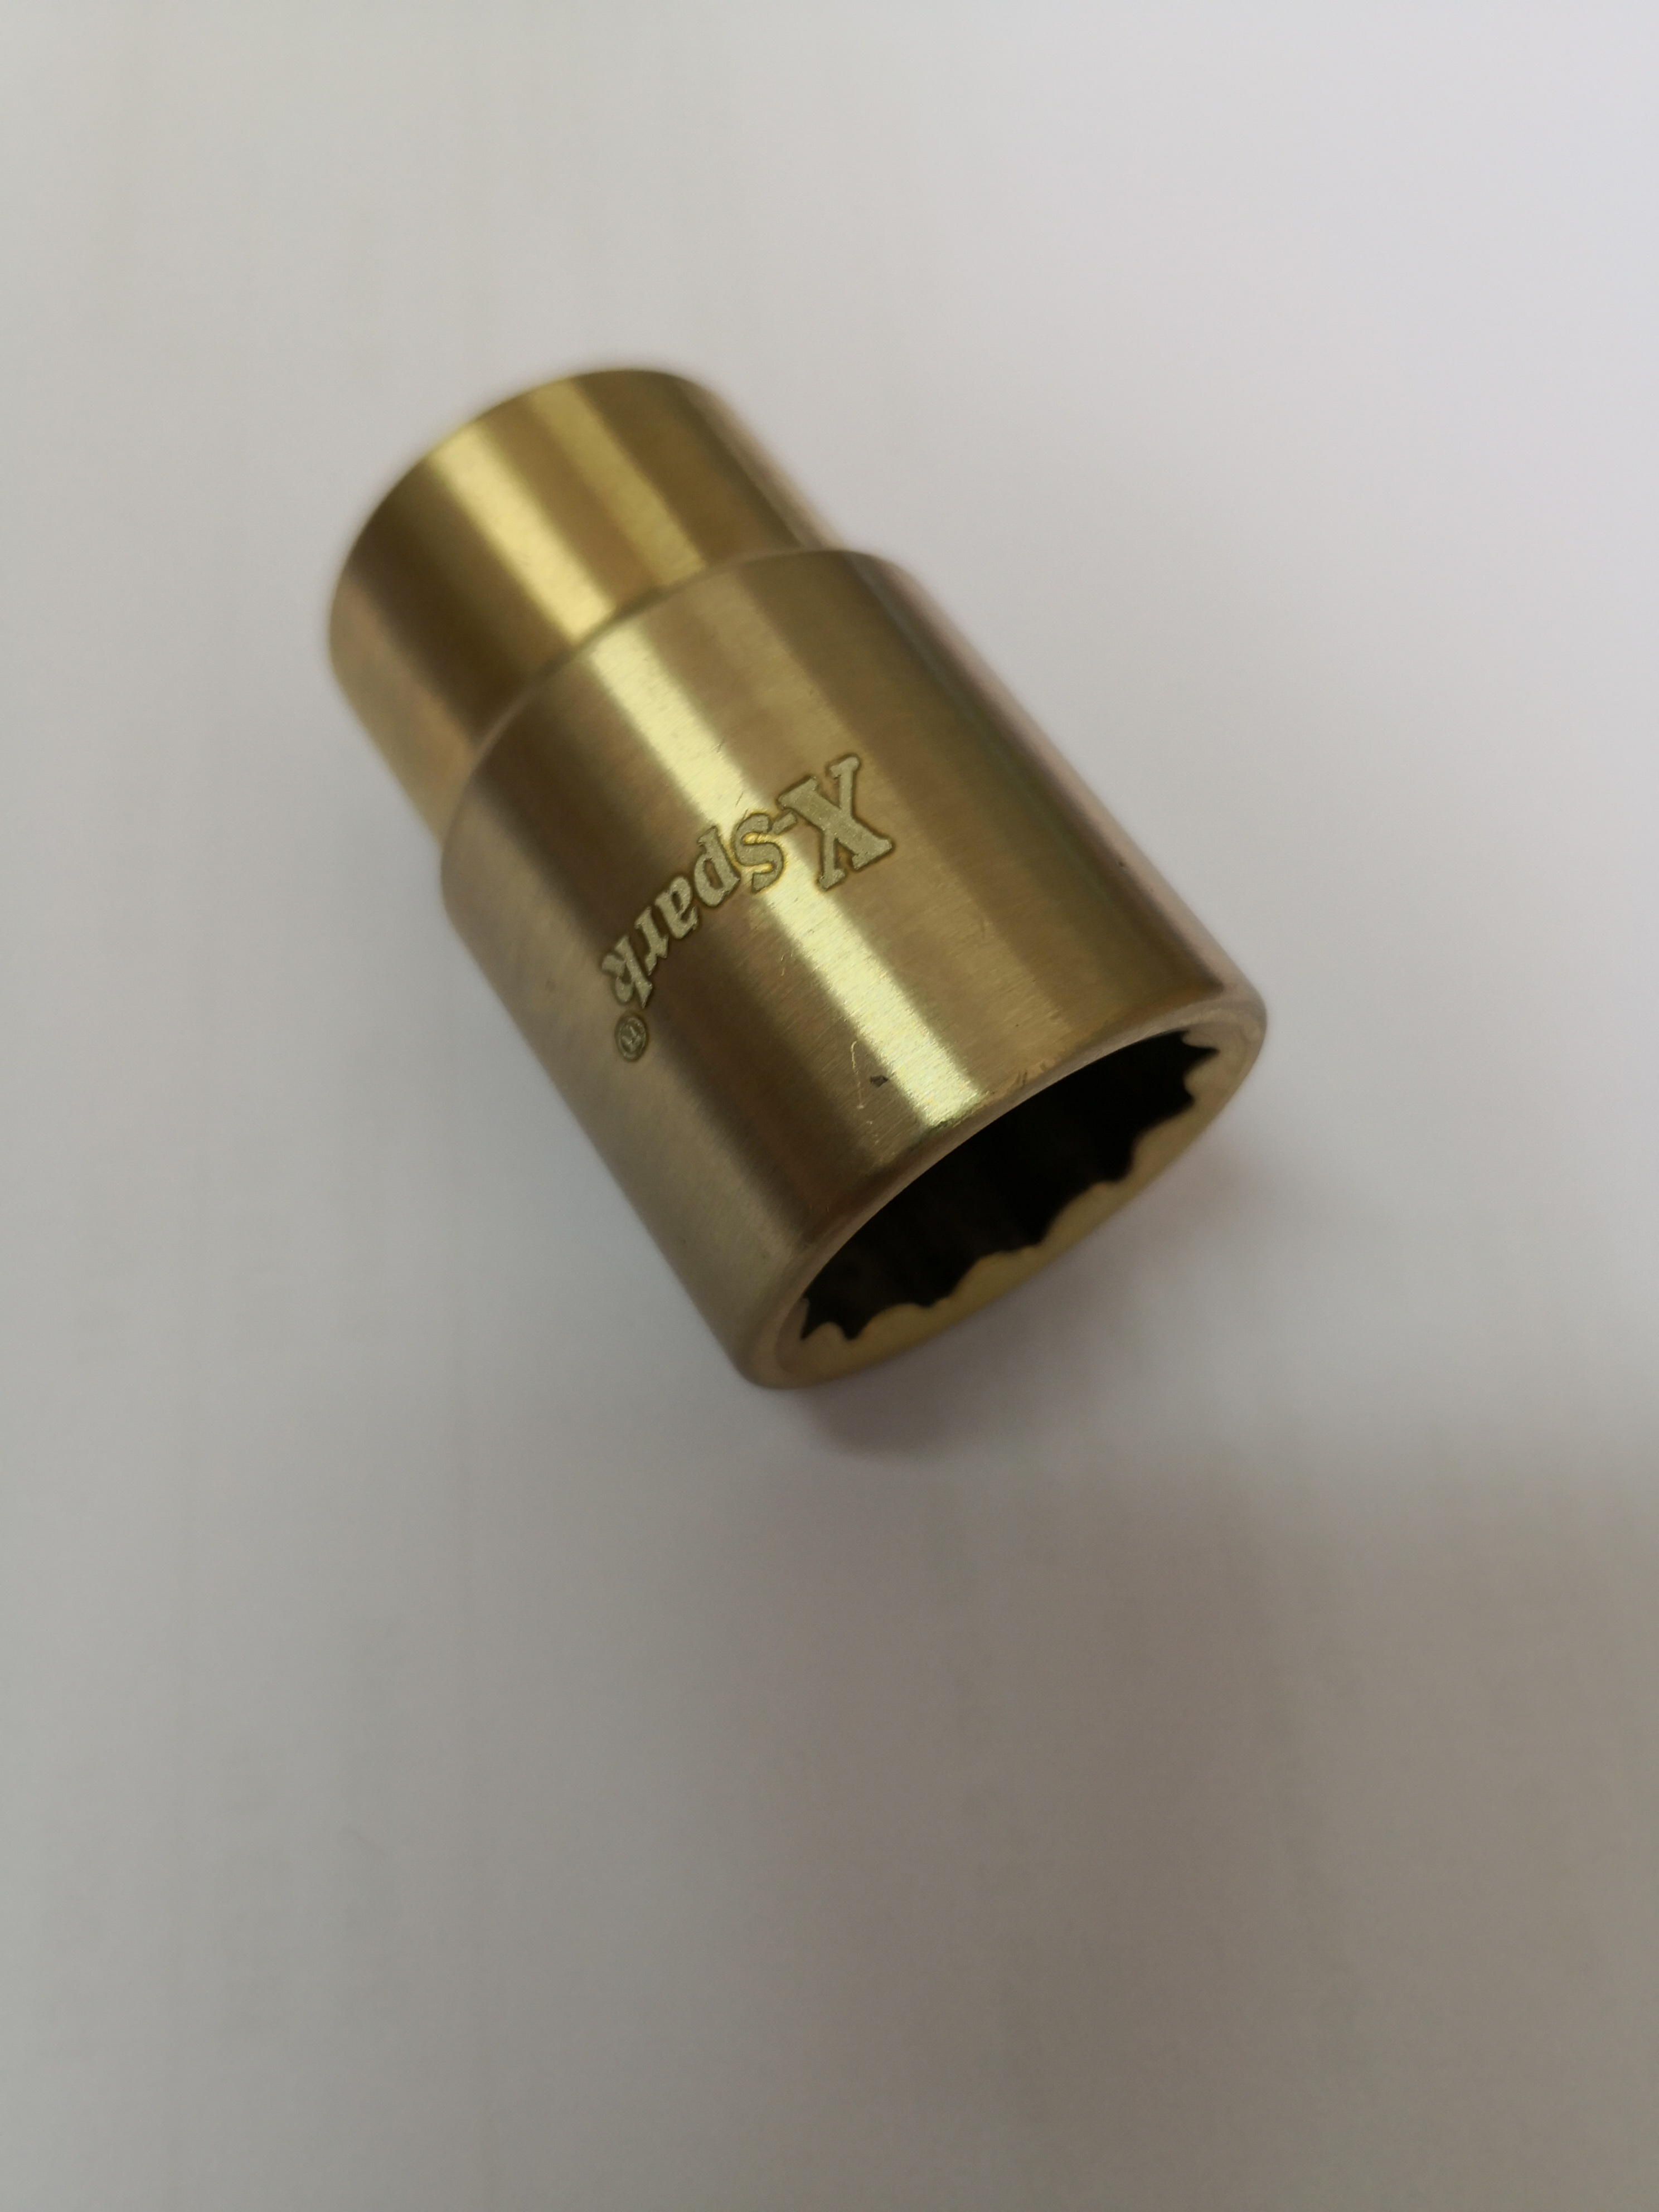 Socket 1/4 19 mm- non-sparking / low-sparking